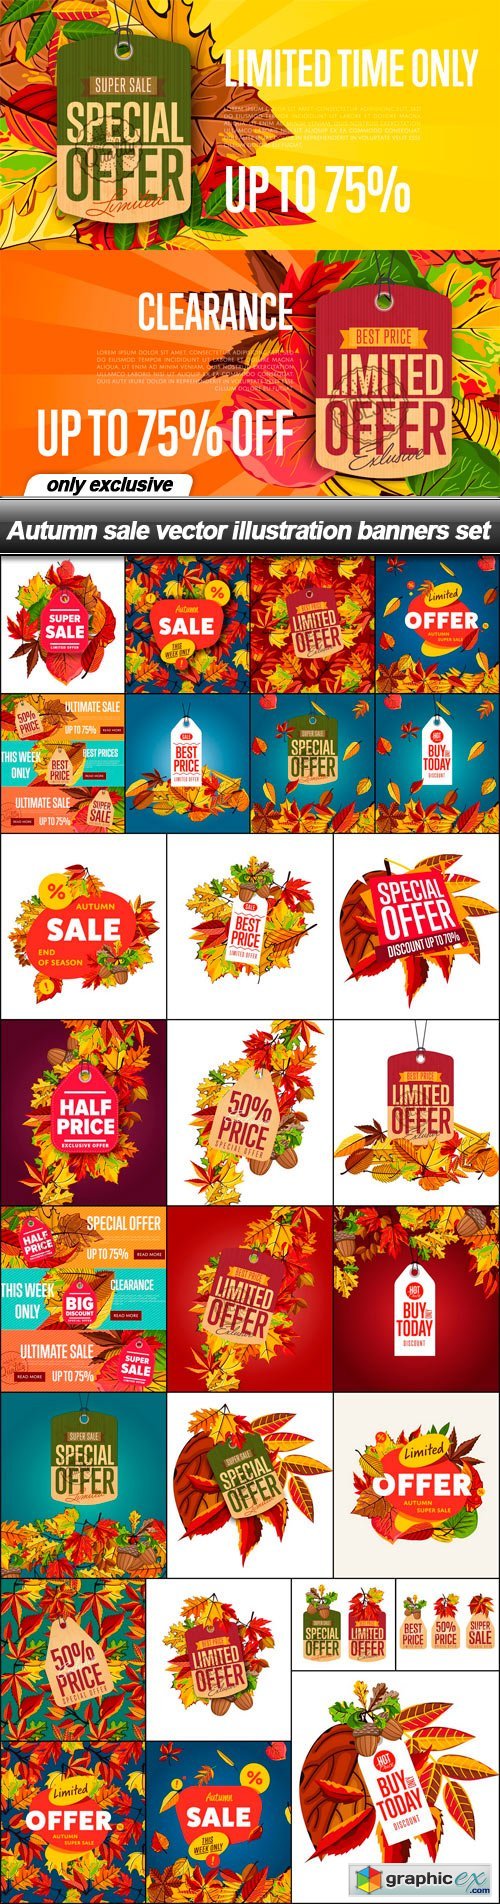 Autumn sale vector illustration banners set - 28 EPS